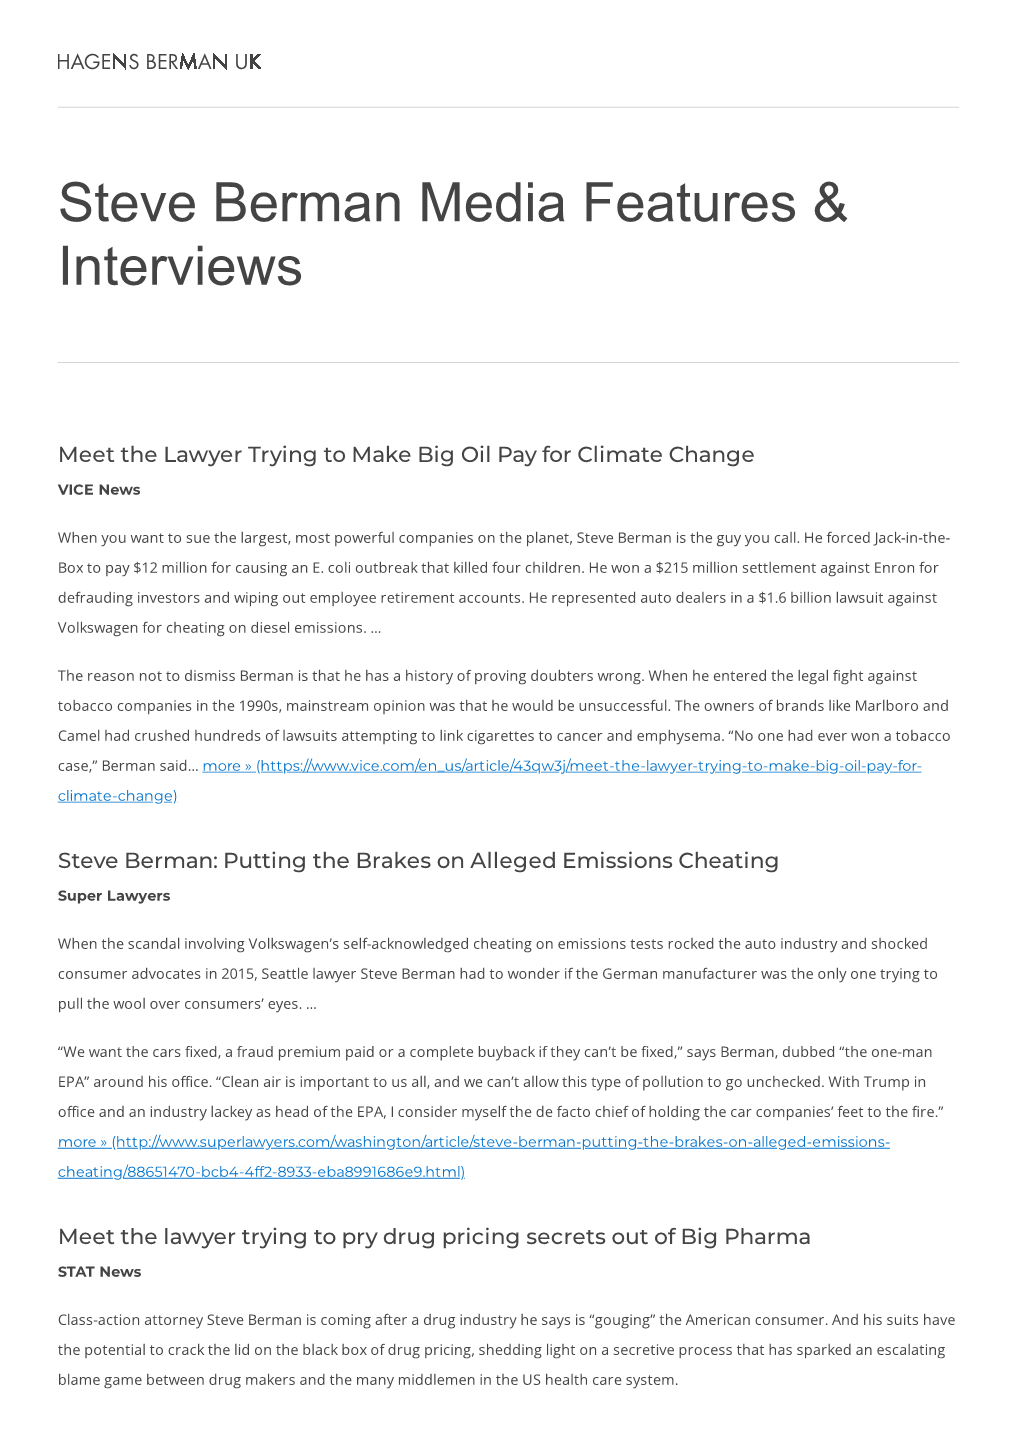 Steve Berman Media Features & Interviews